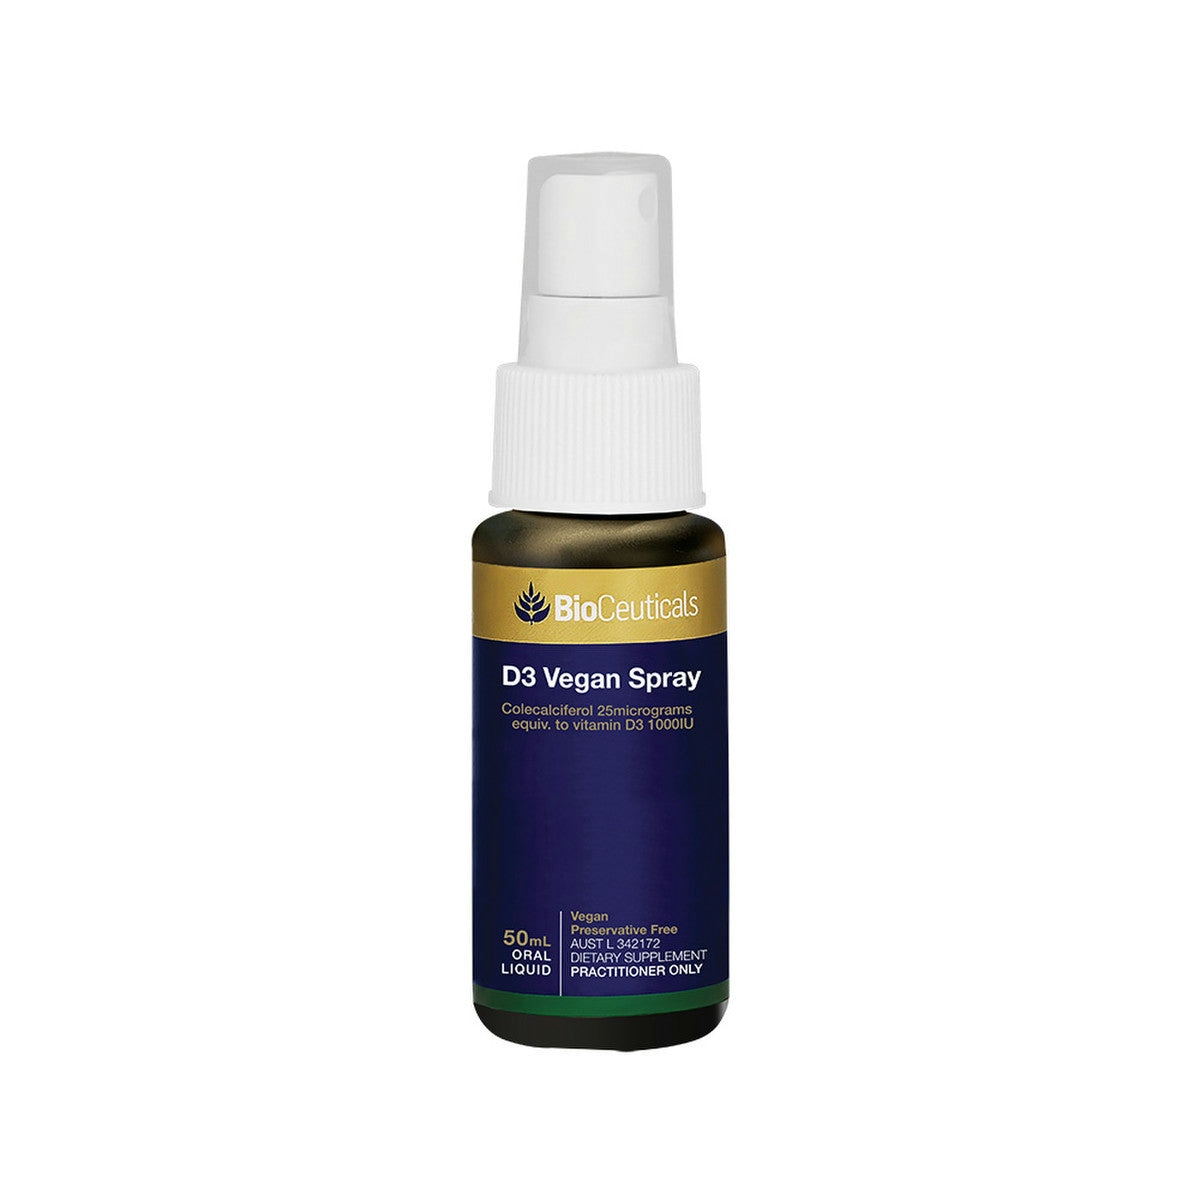 image of BioCeuticals D3 Vegan Spray Oral Liquid 50ml on white background